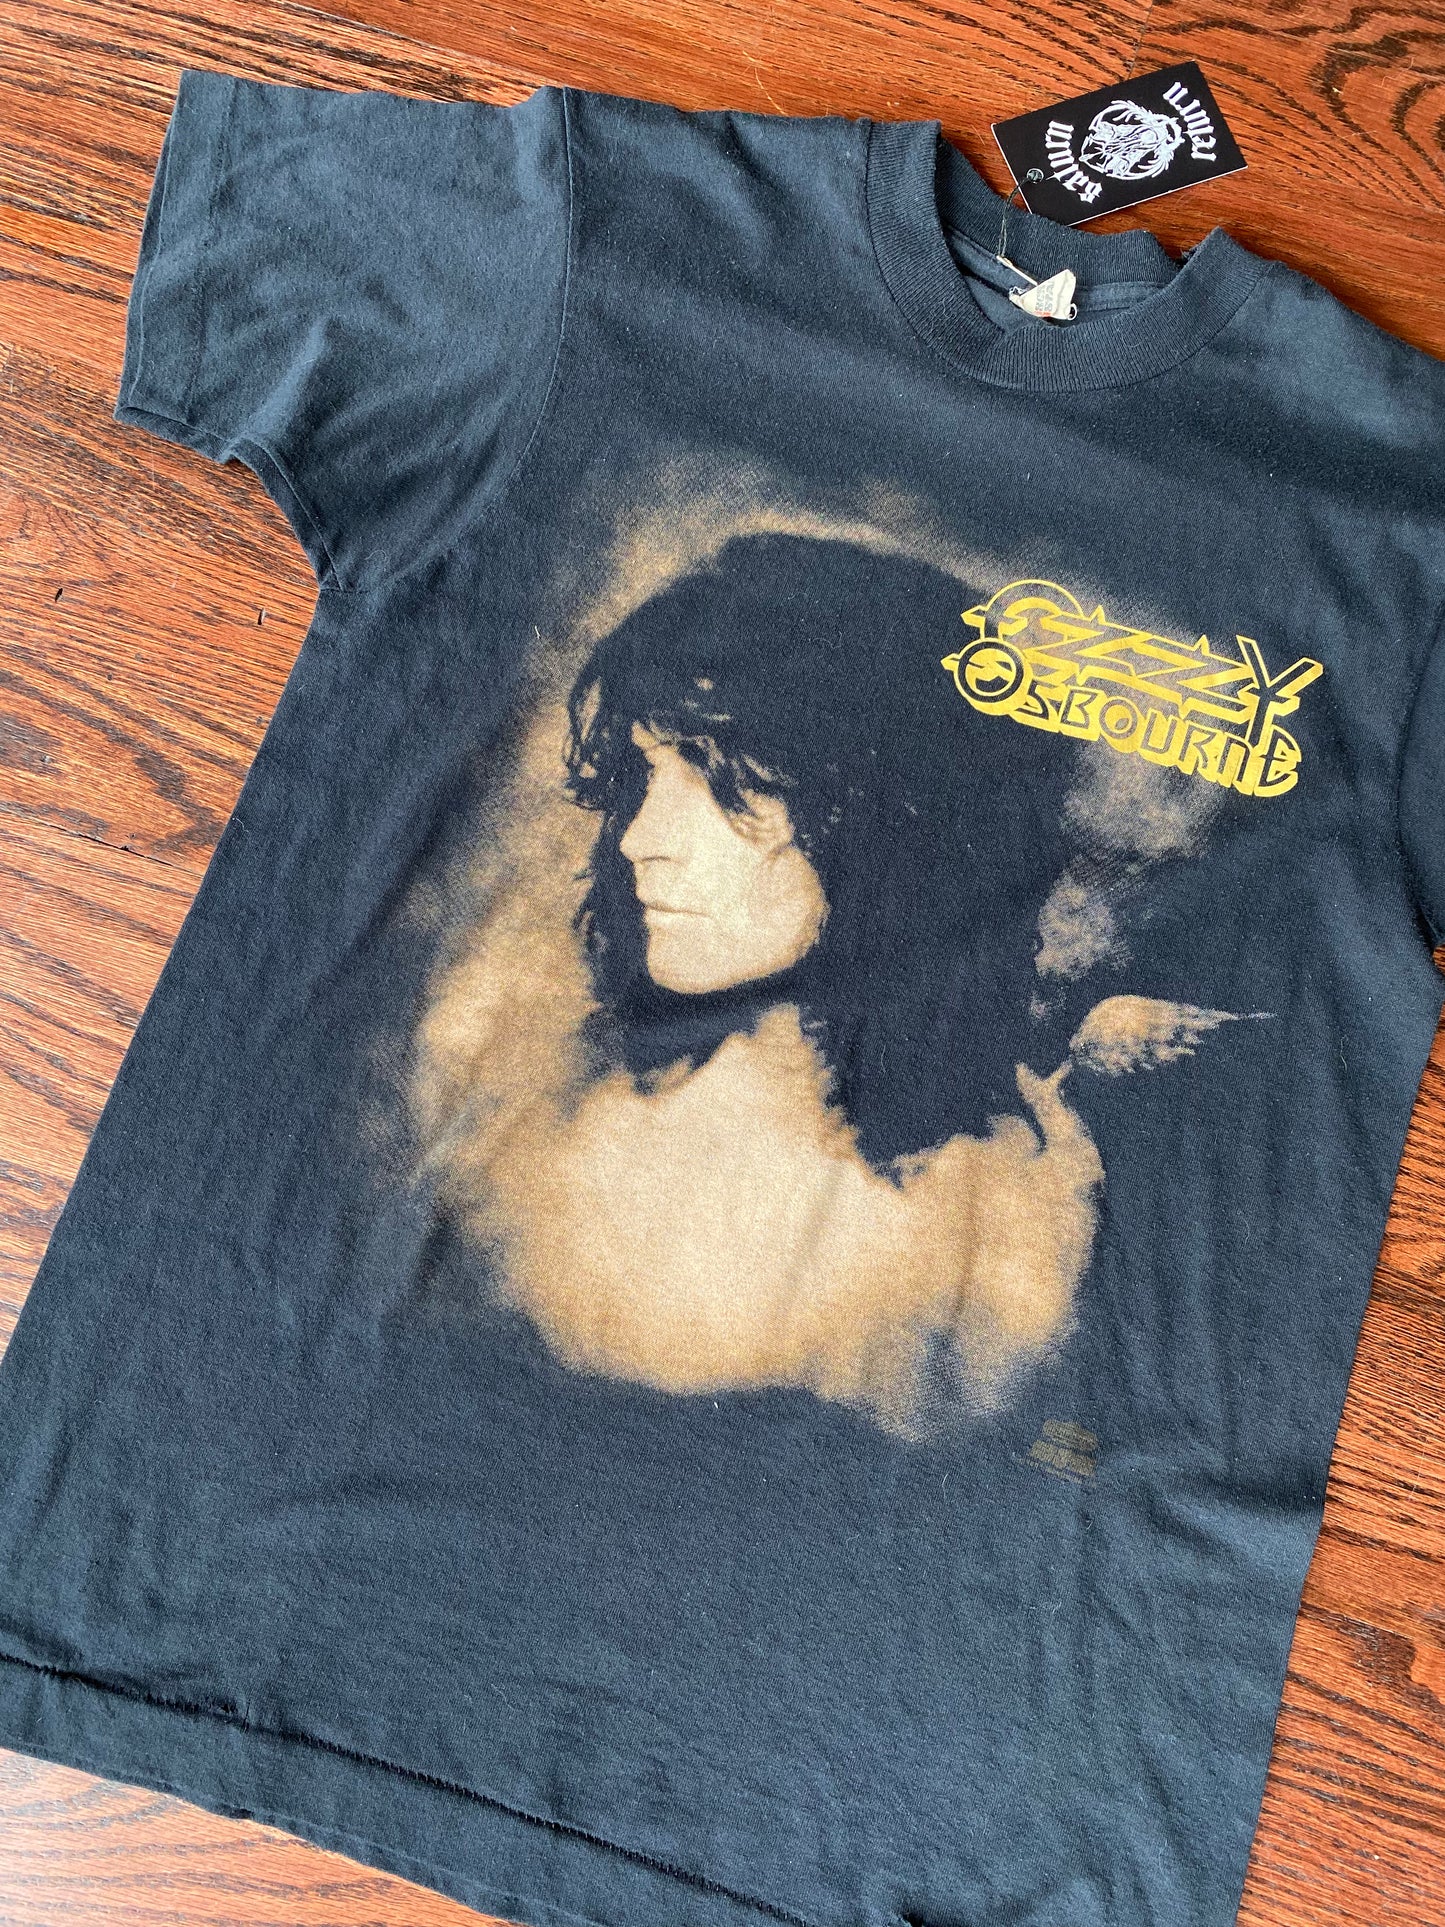 Vintage 90’s Ozzy Osbourne “No More Tears” Album Cover T-Shirt